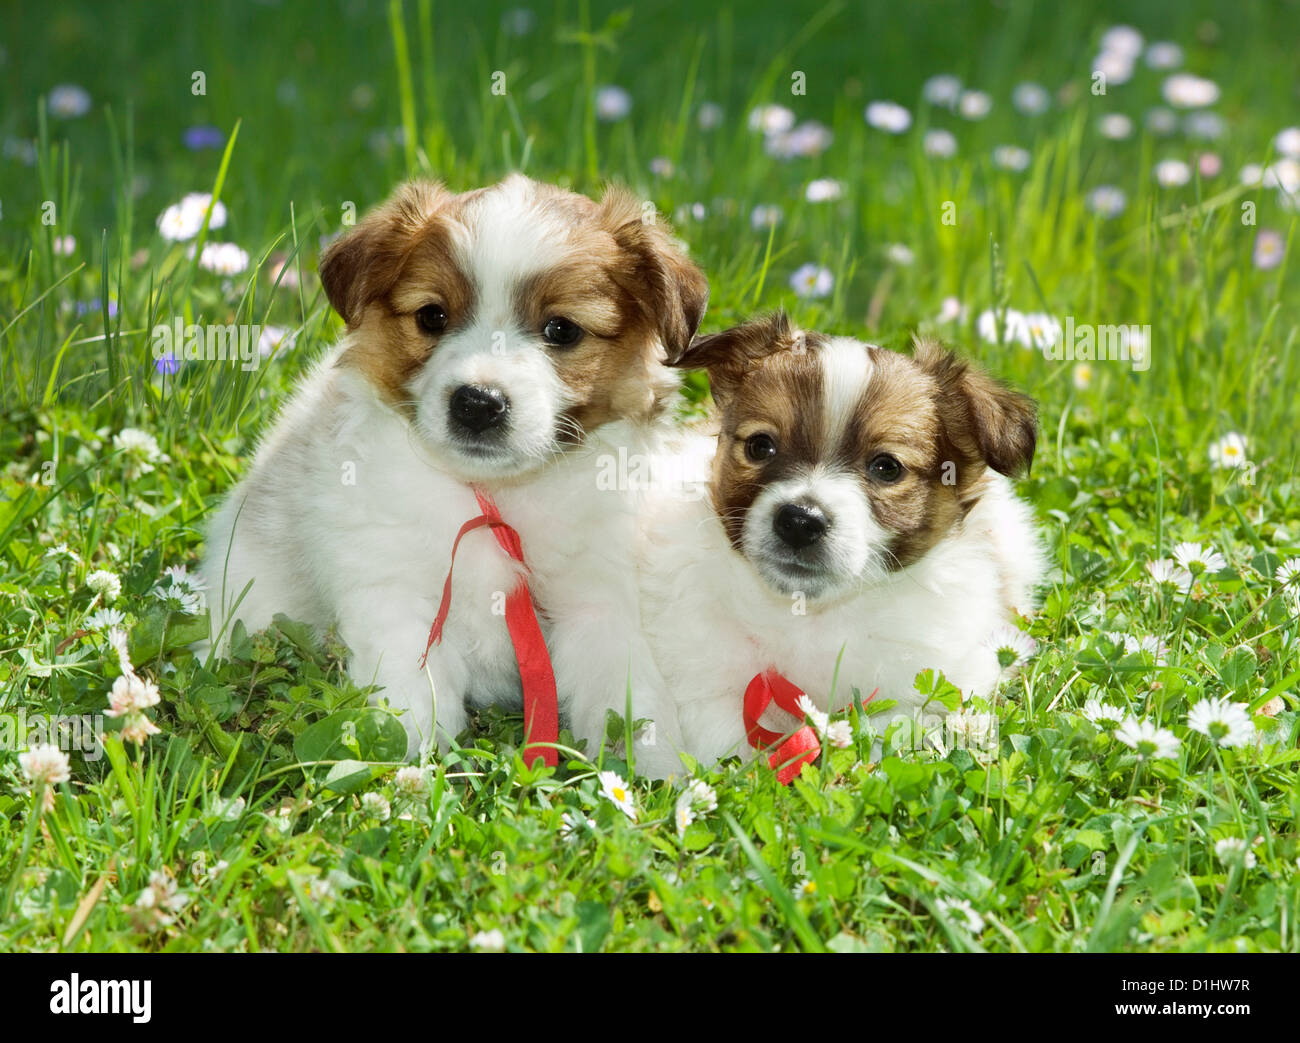 Half breed puppies in the garden Stock Photo